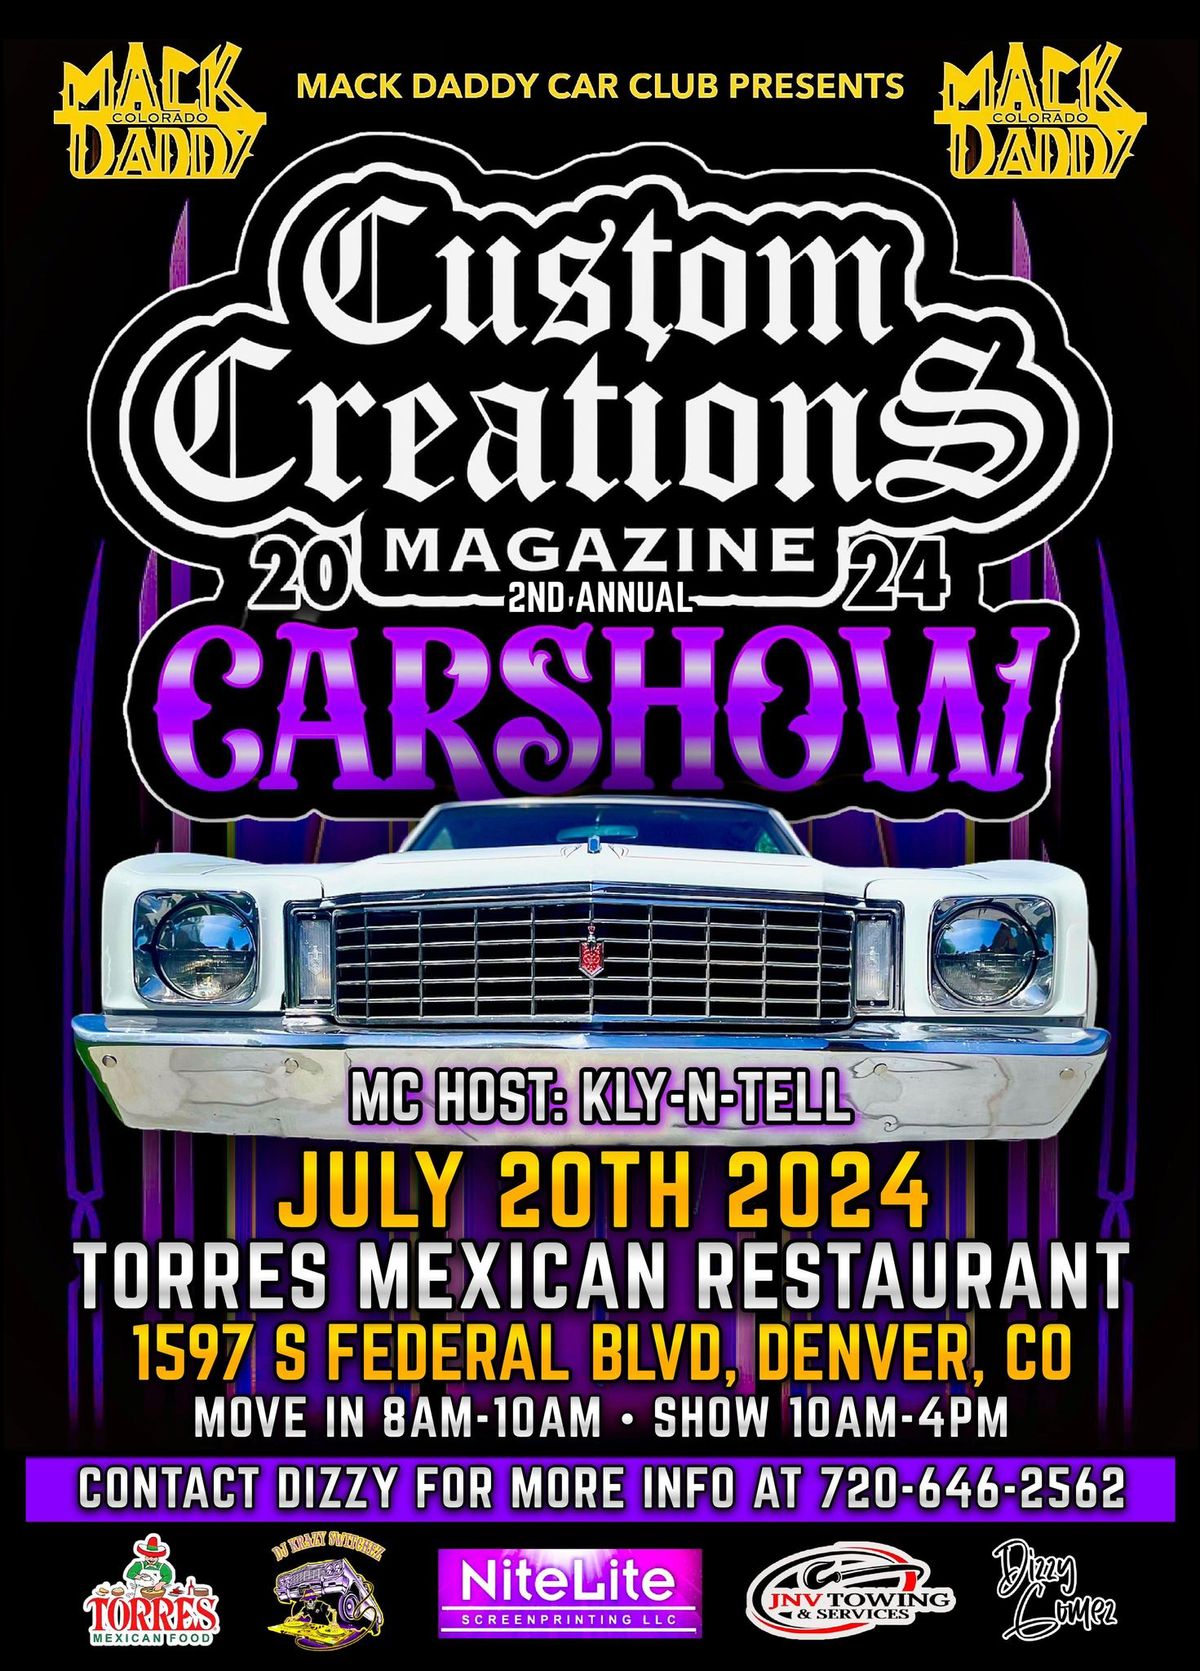 Custom Creations Magazine Car 2nd Annual Car Show